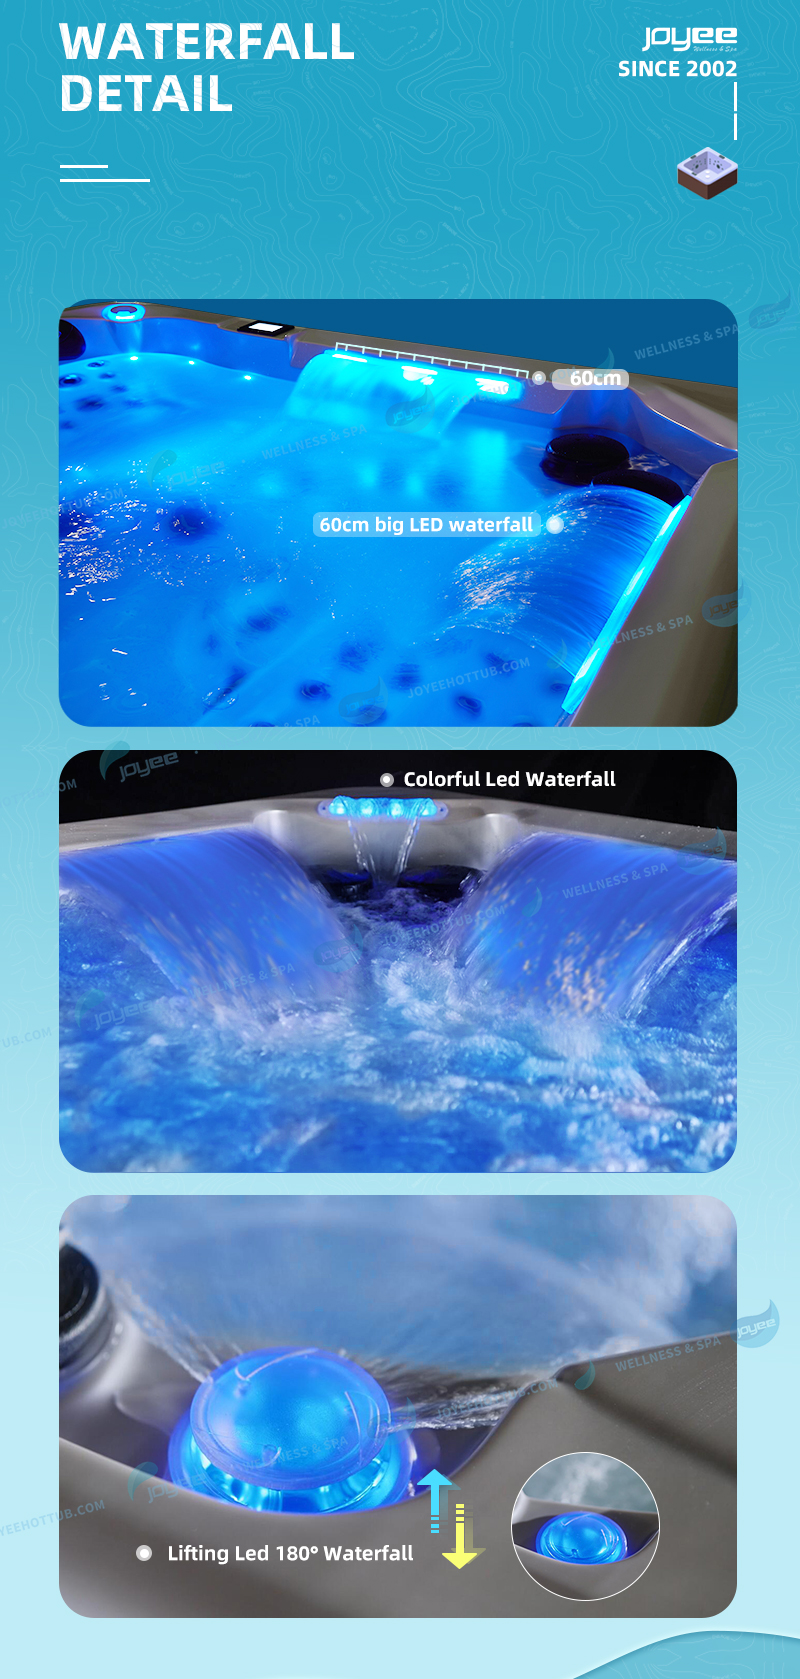 jacuzzi hot tub (4)waterfall